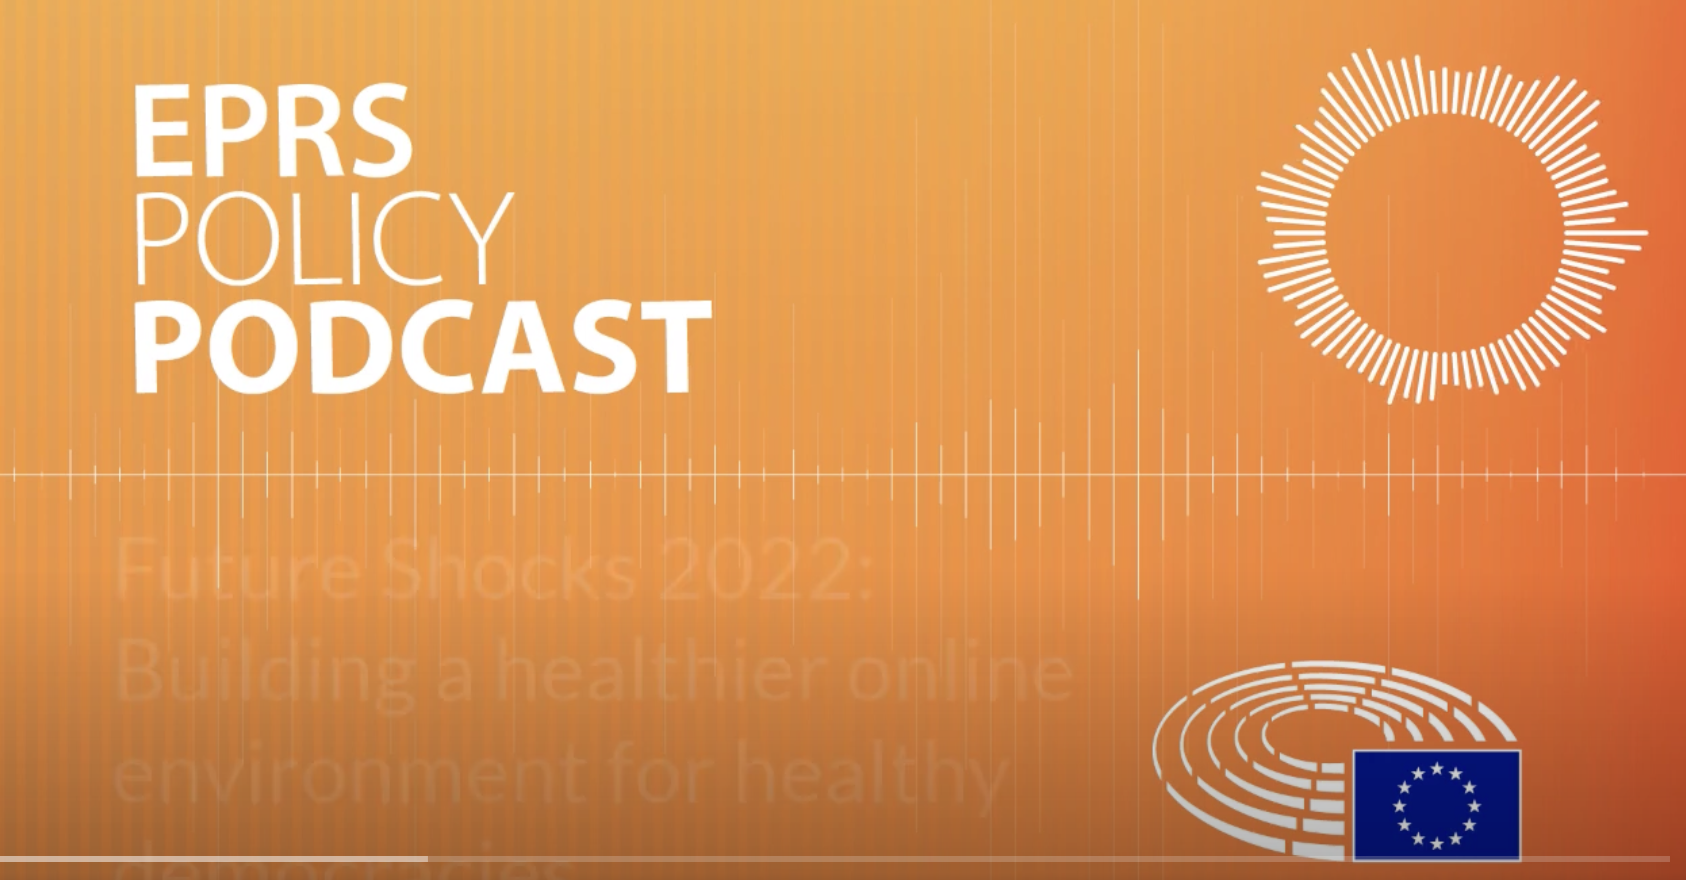 Future Shocks 2022: Building a healthier online environment for healthy democracies